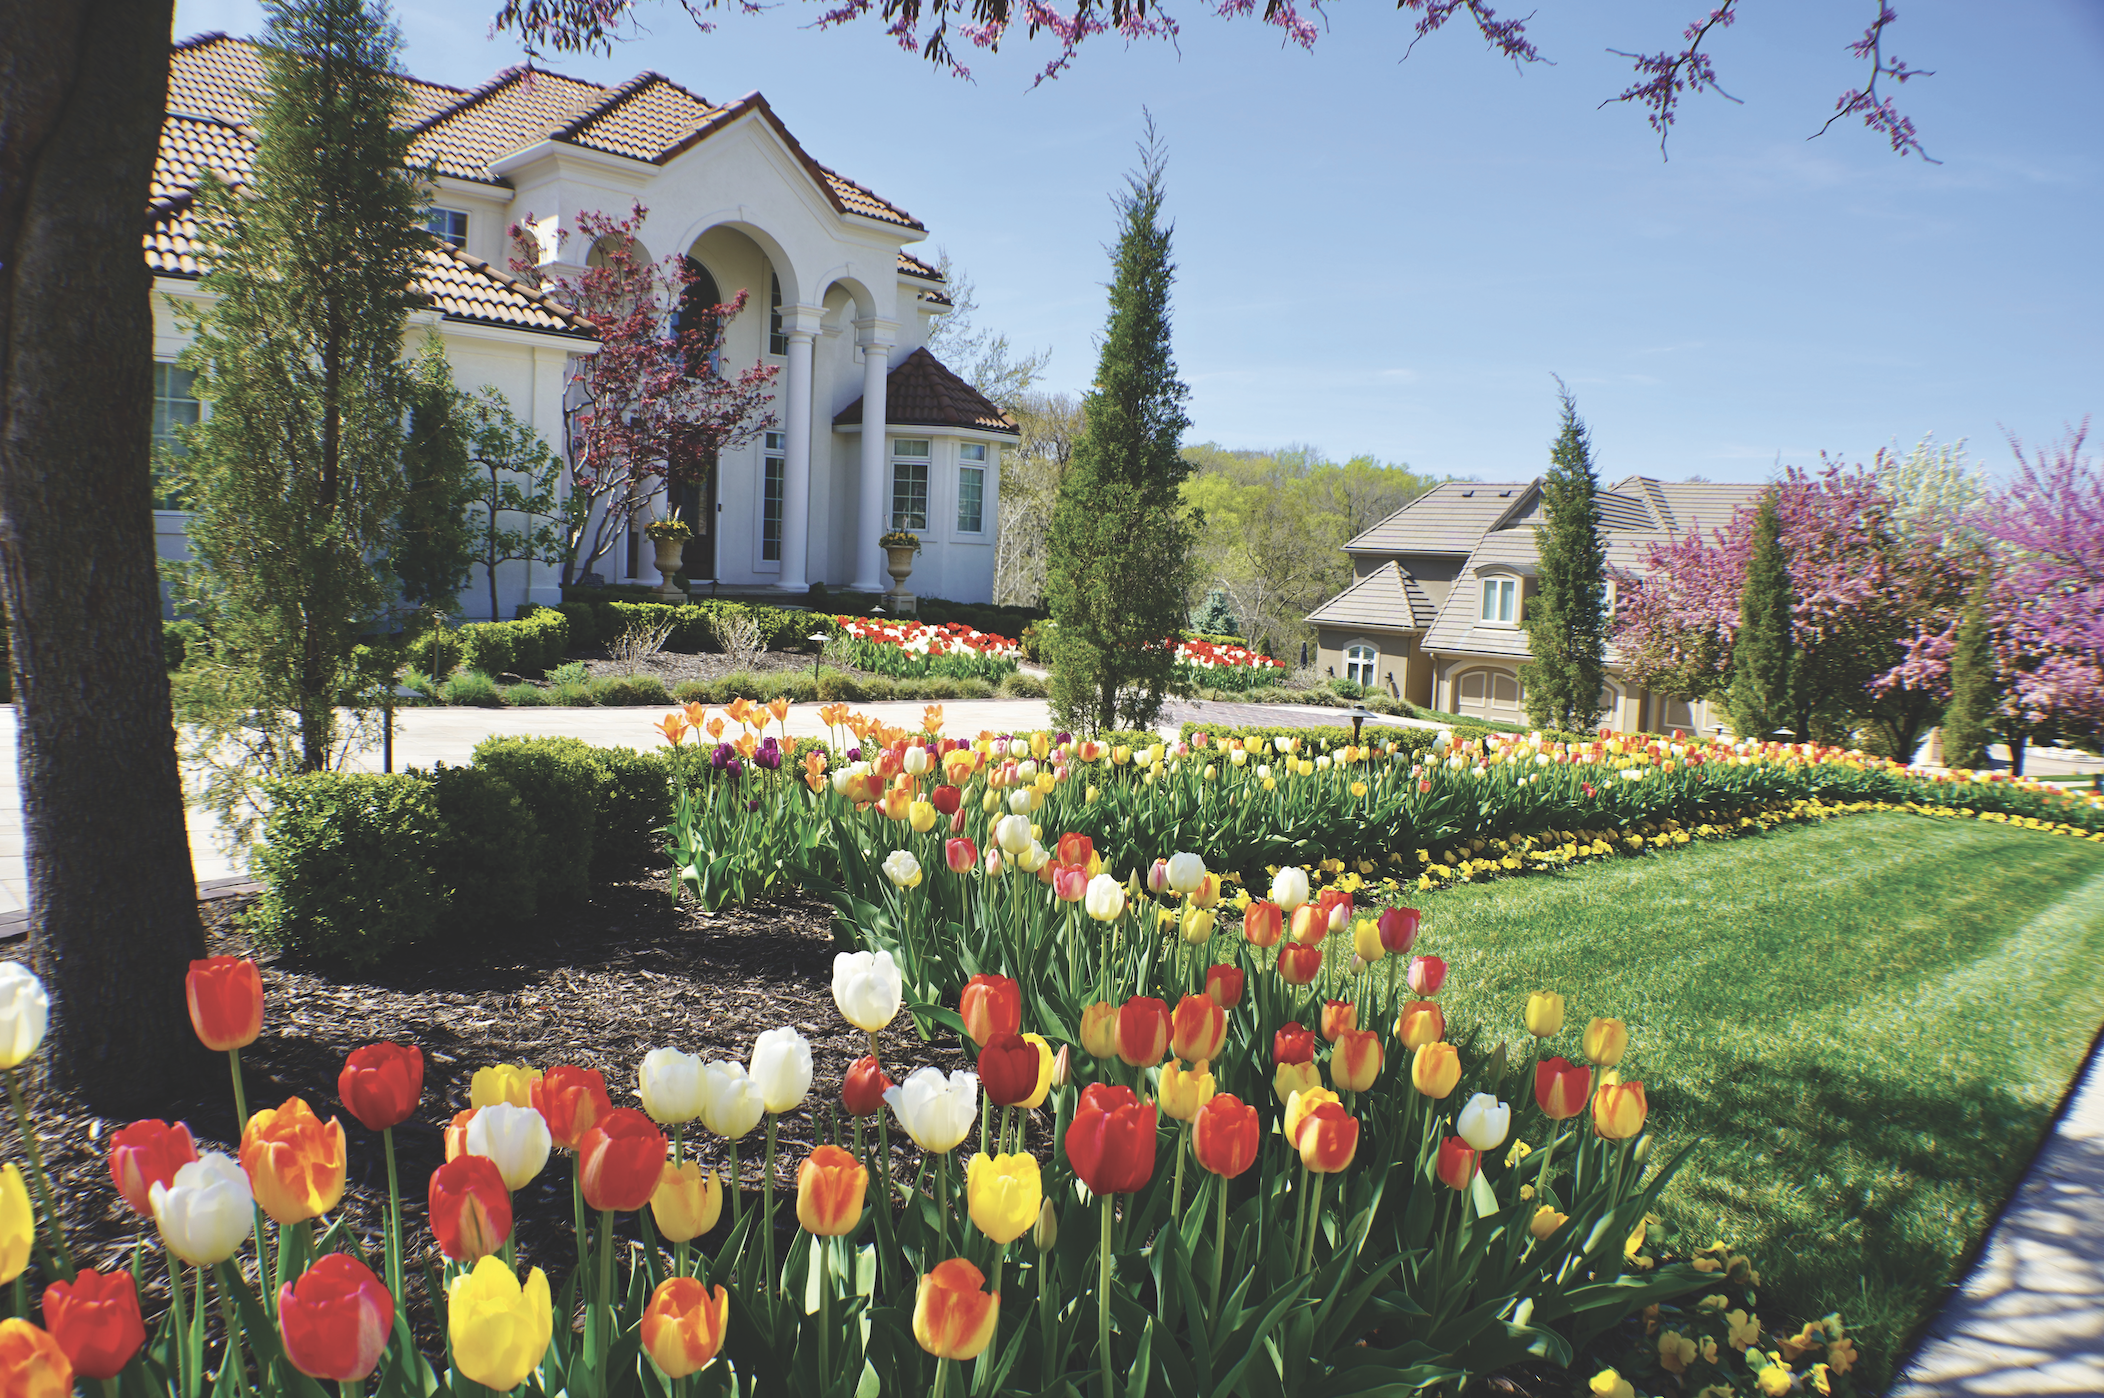 Kansas City Home with Tulips